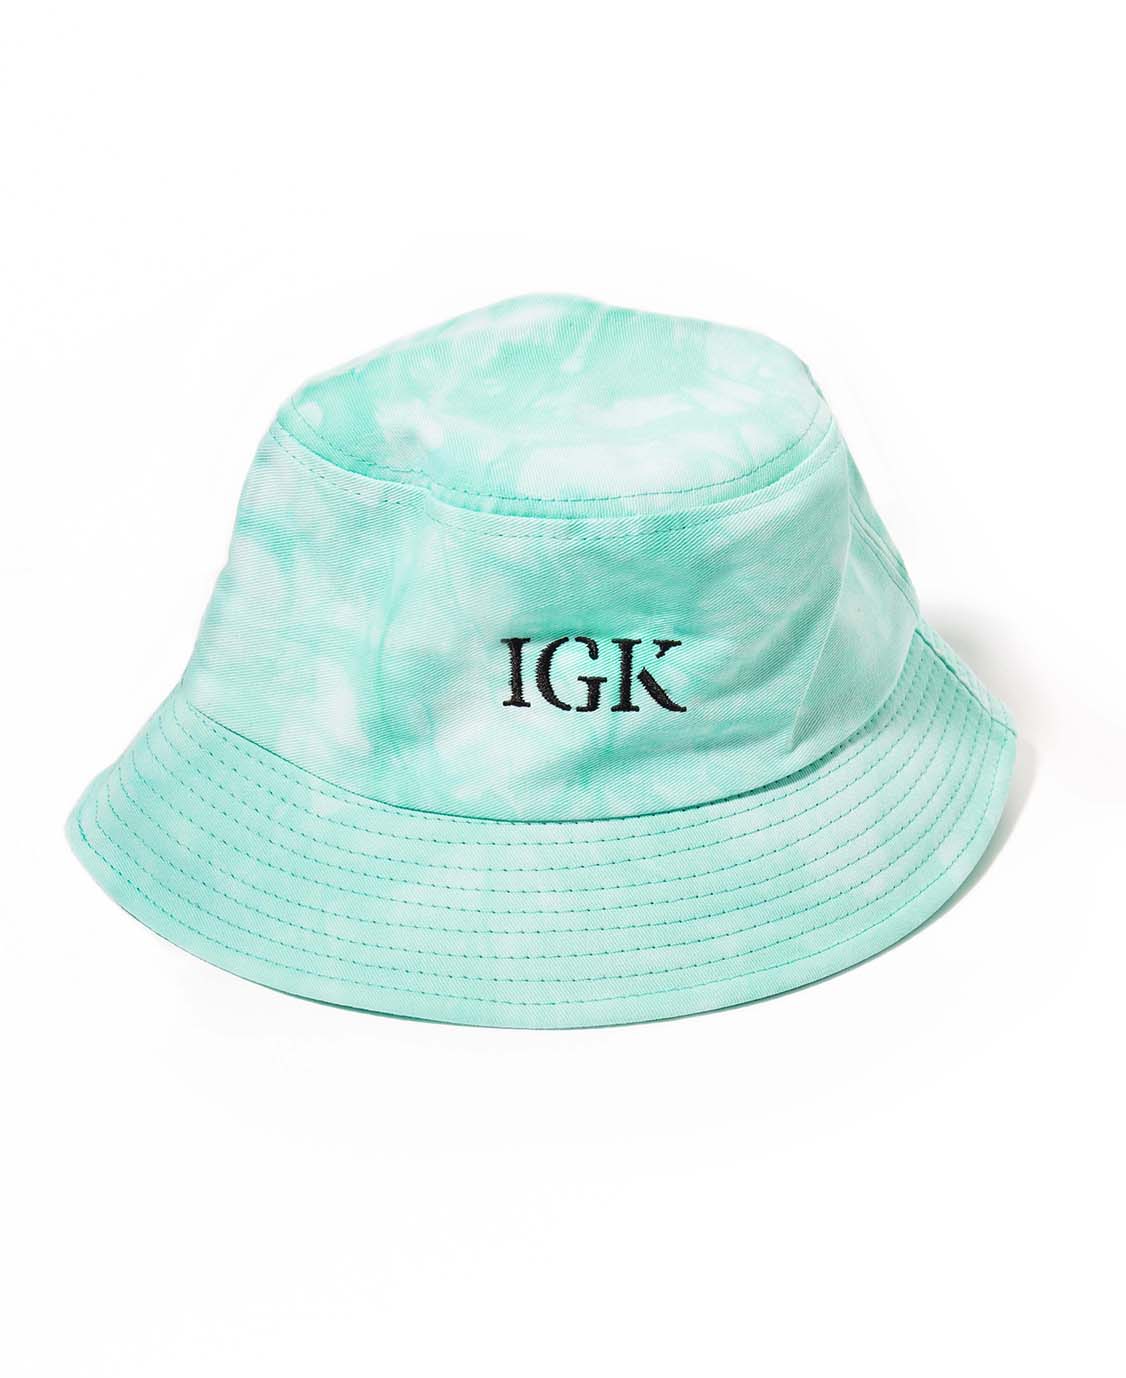 IGK Tie Dye Bucket Hat